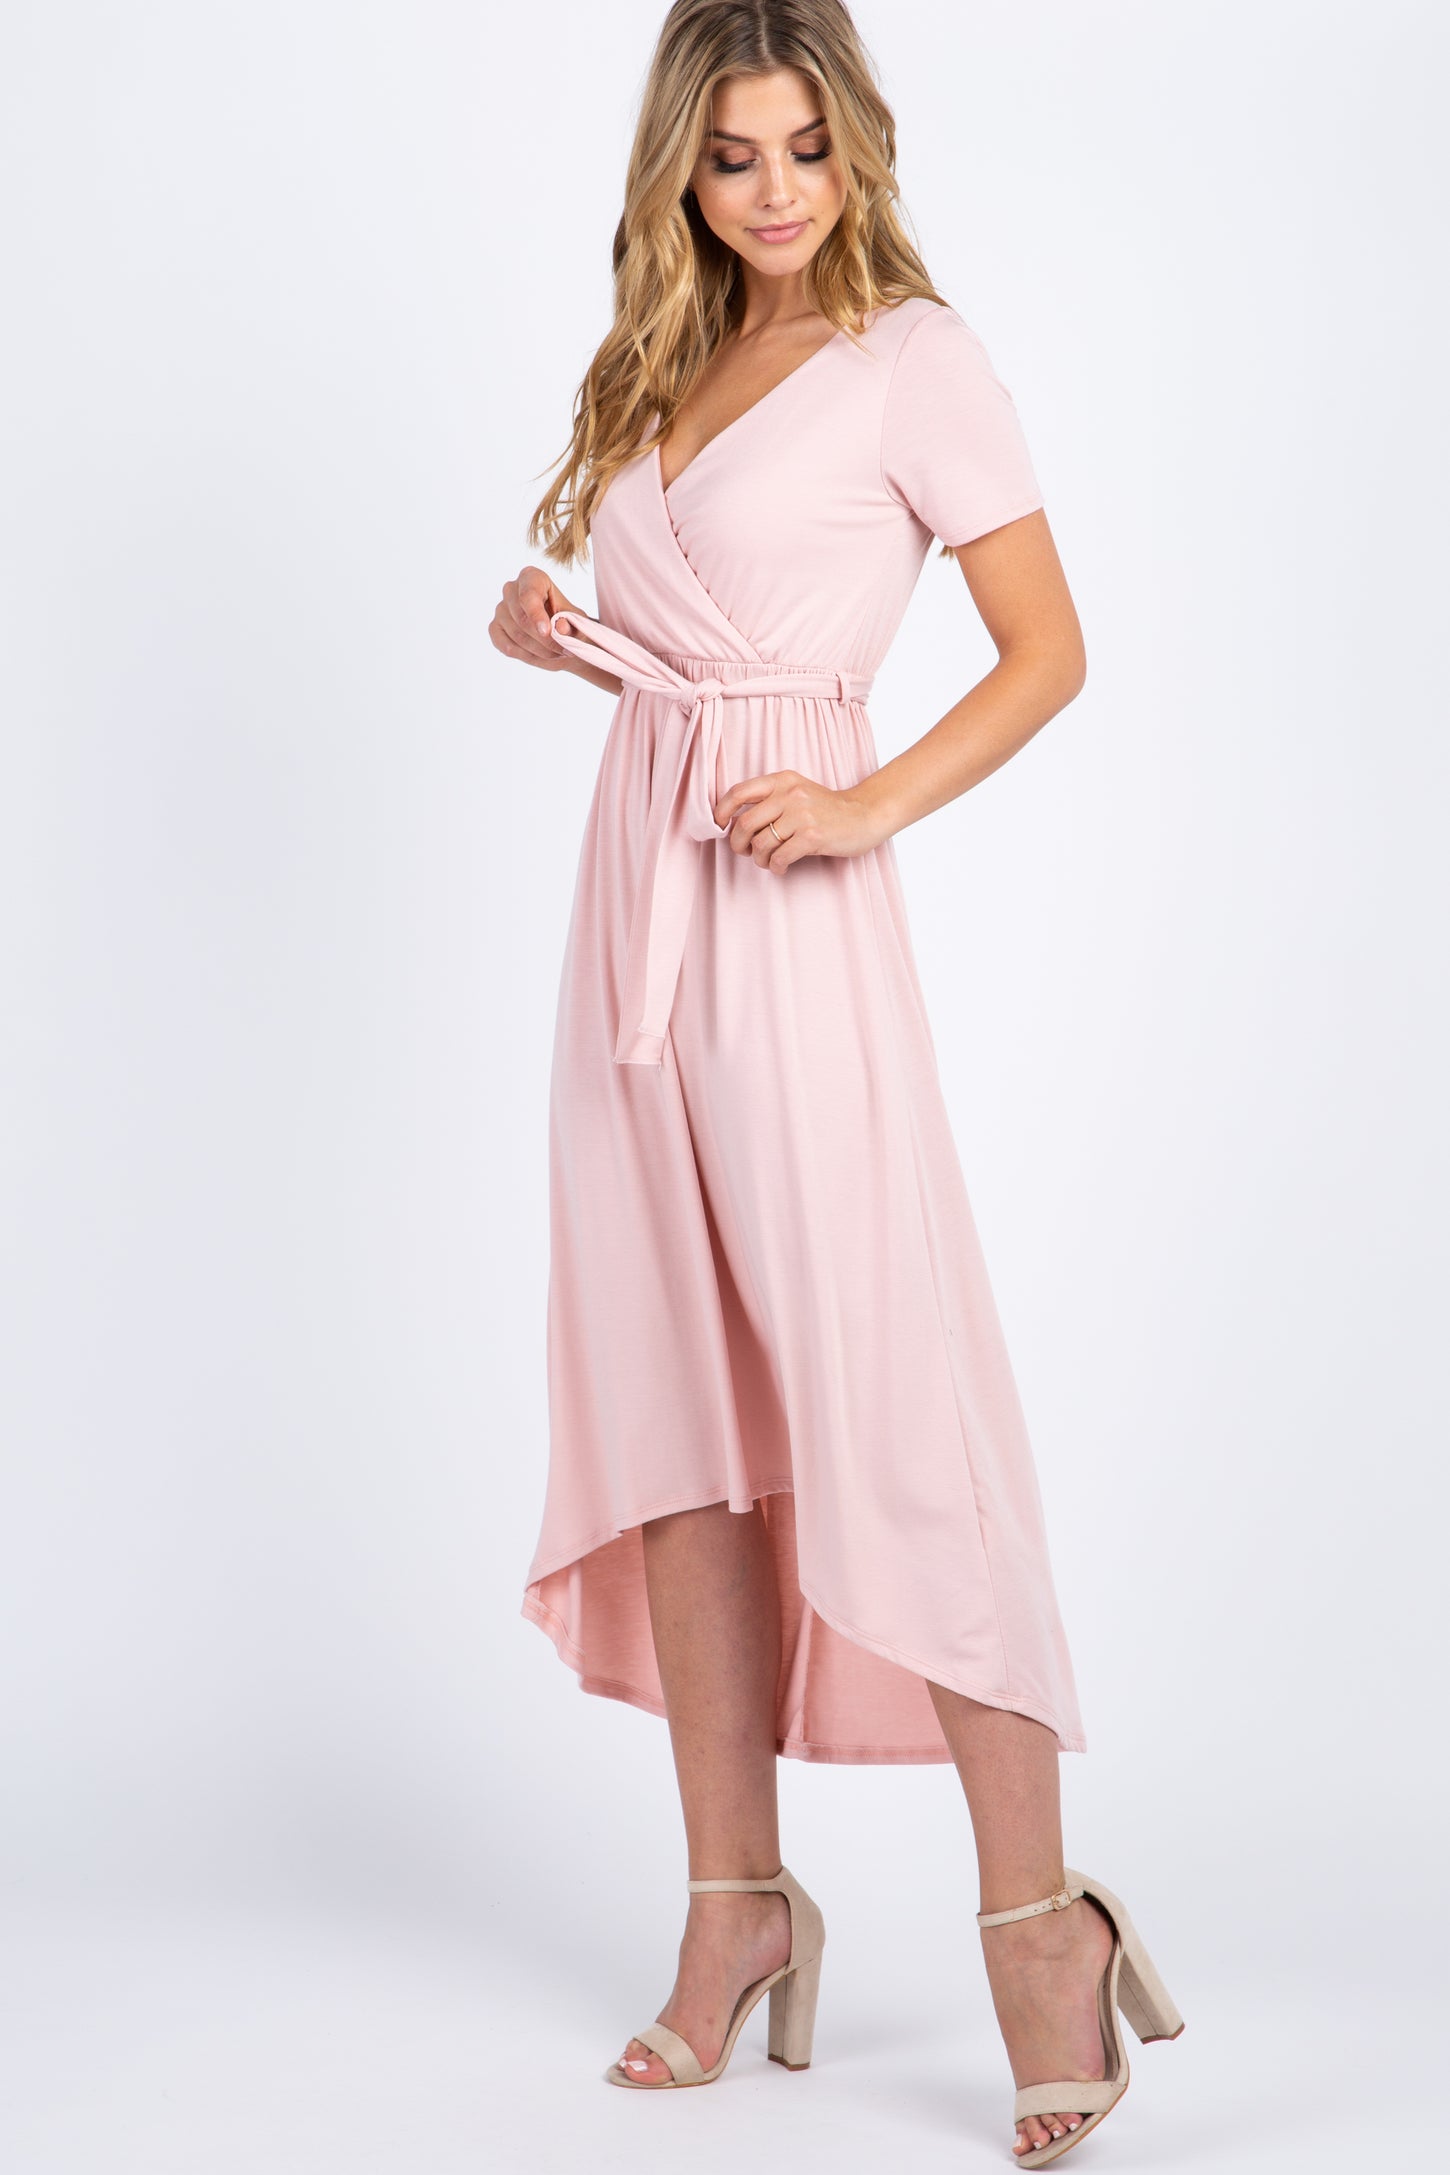 PinkBlush Light Pink Solid Hi-Low Wrap Dress